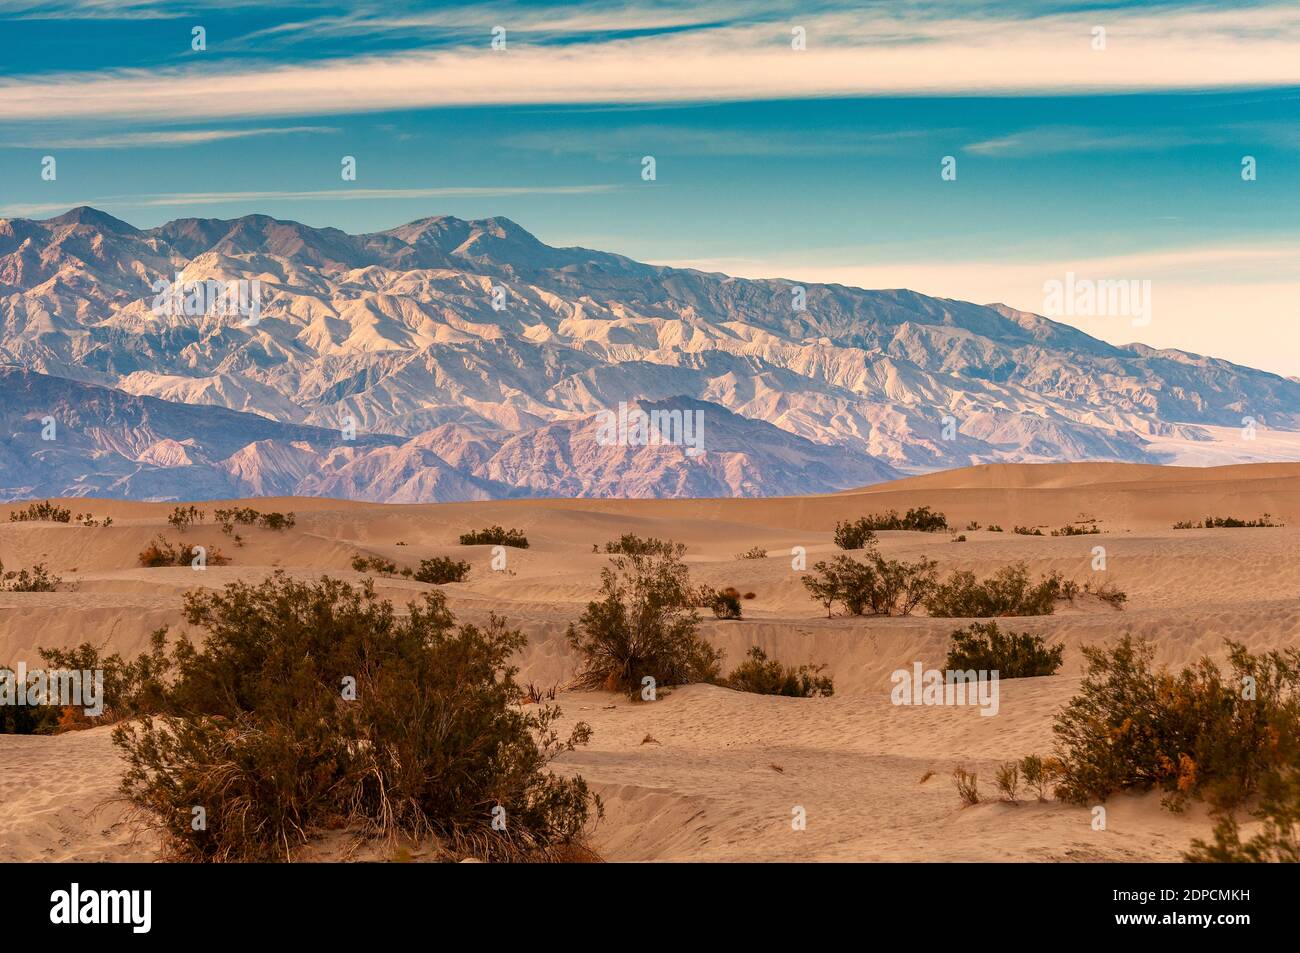 Scenic desert landscape at sunset, Death Valley National Park, California, USA Stock Photo